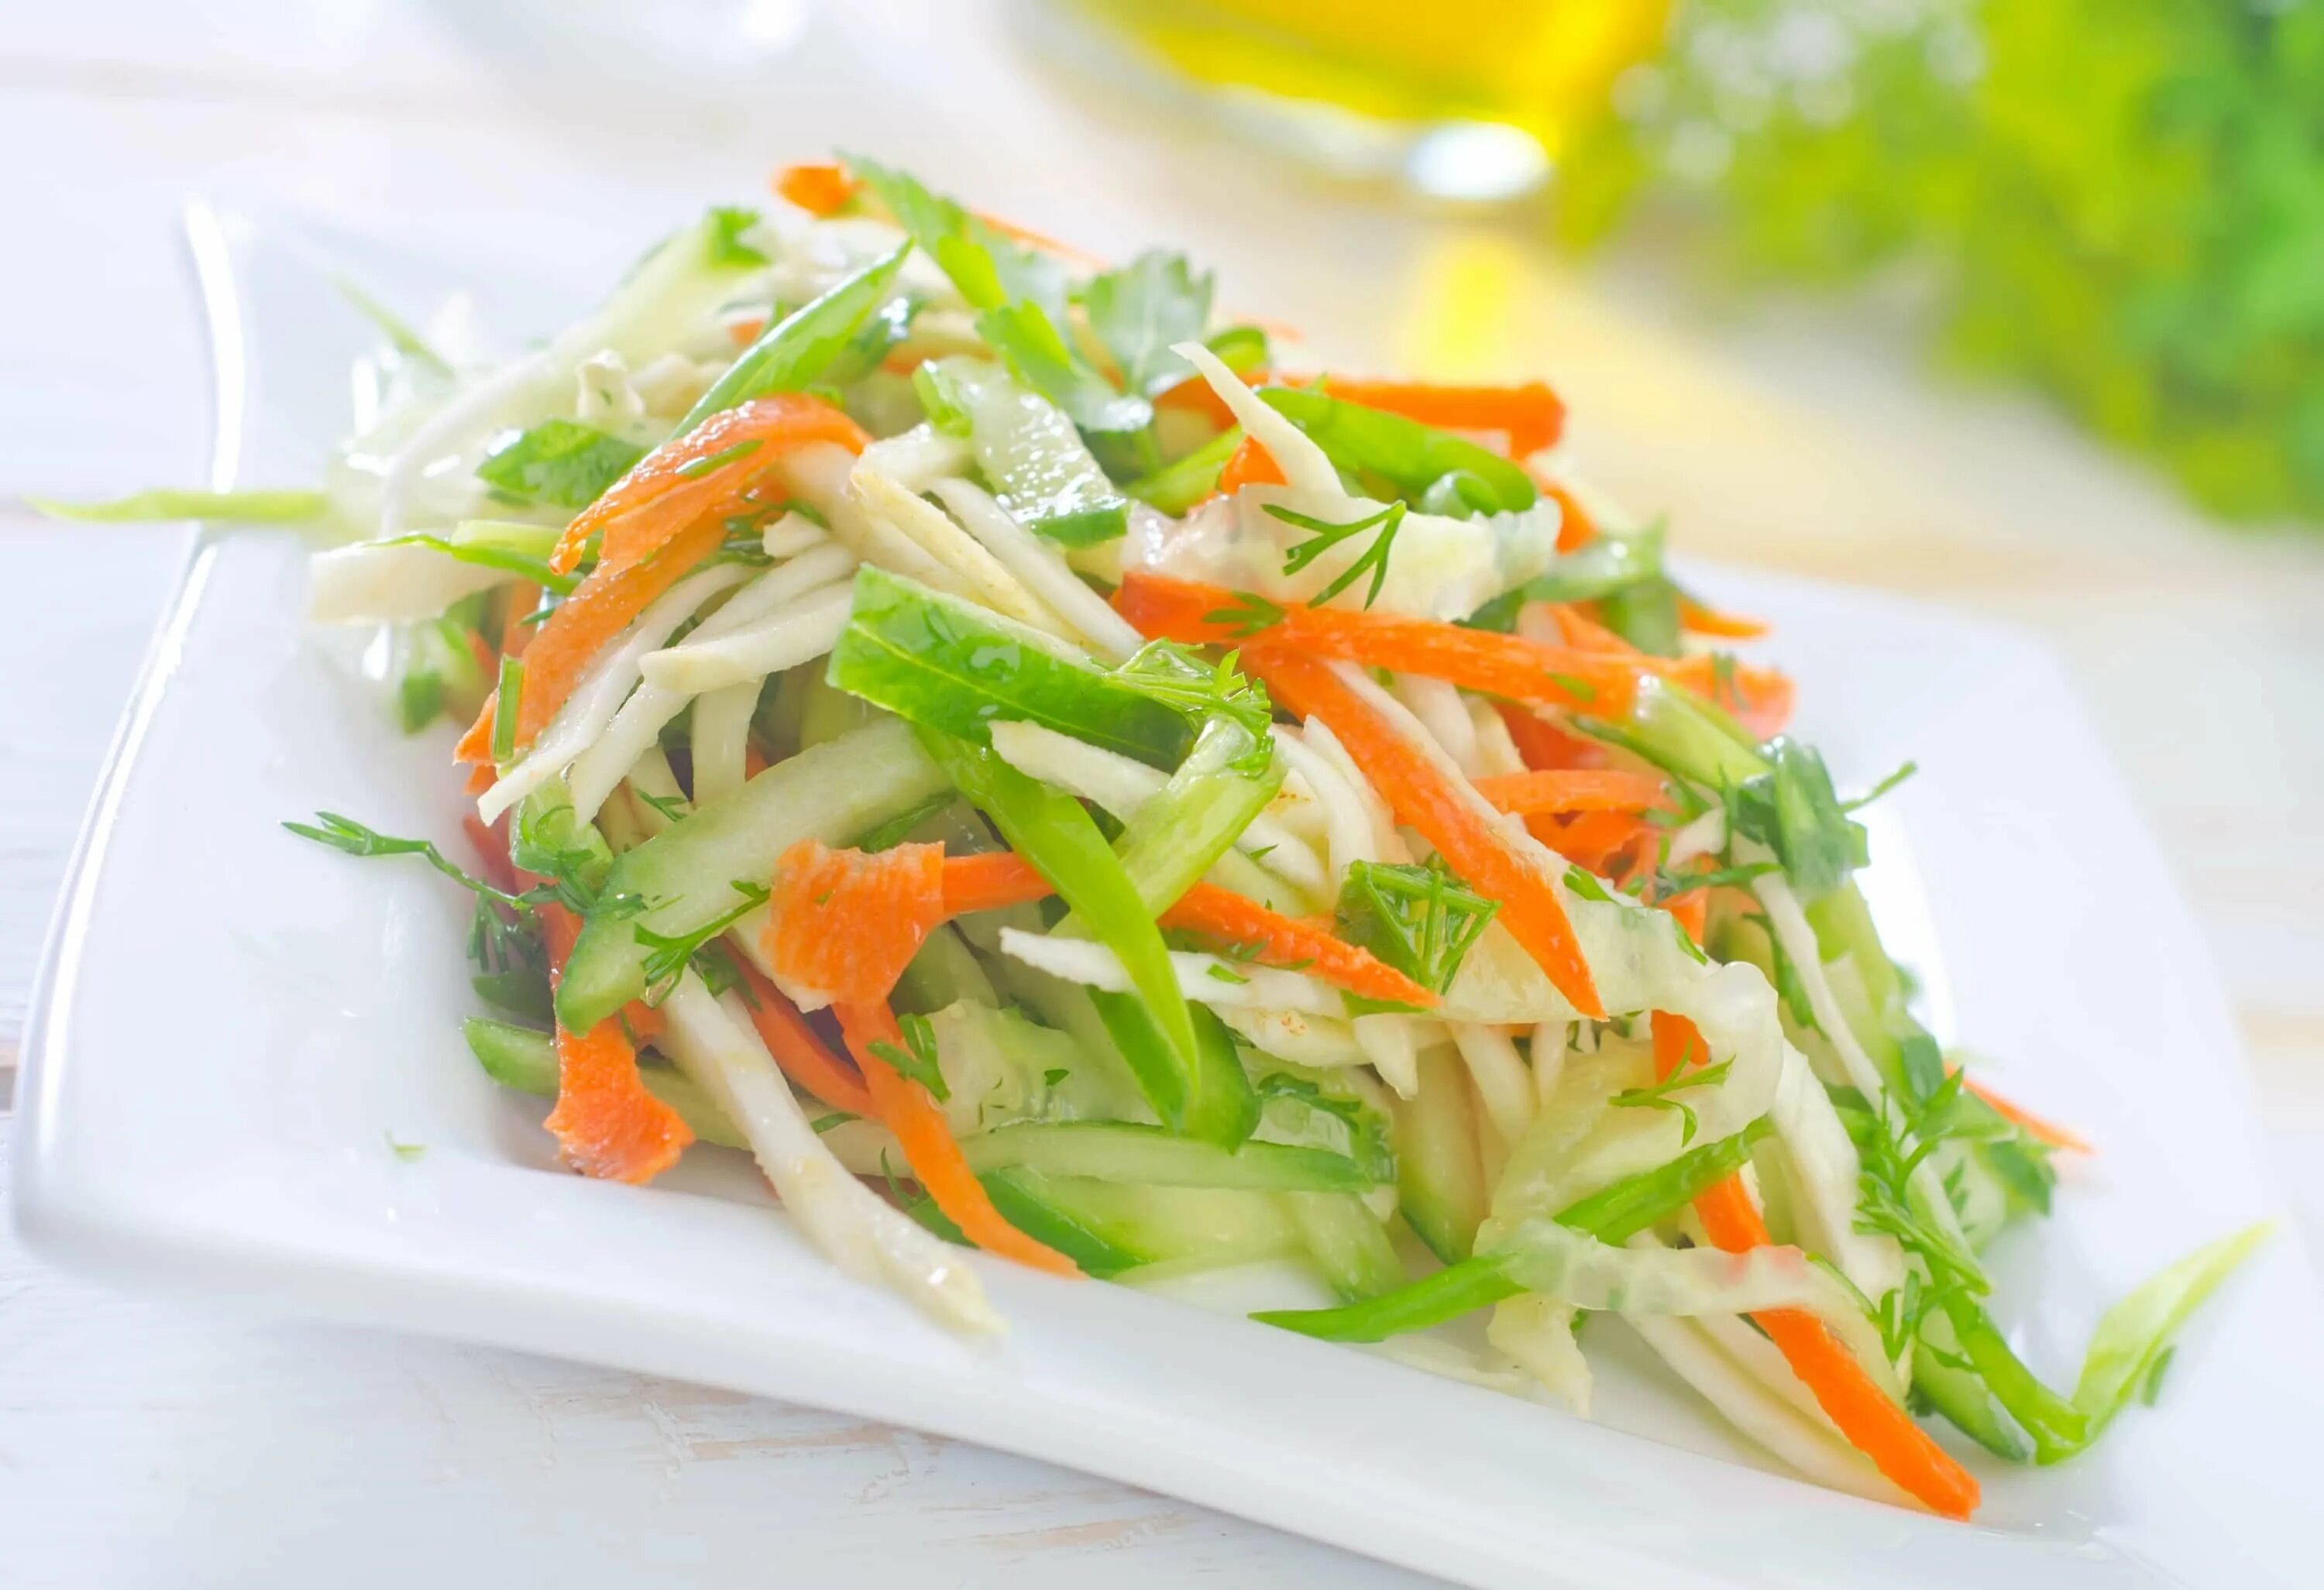 Витаминный (капуста, перец, огурец, морковь) 100г - 35р. Салат из капусты. Салат витаминный. Овощной витаминный салат. Салат морковка с капустой рецепт